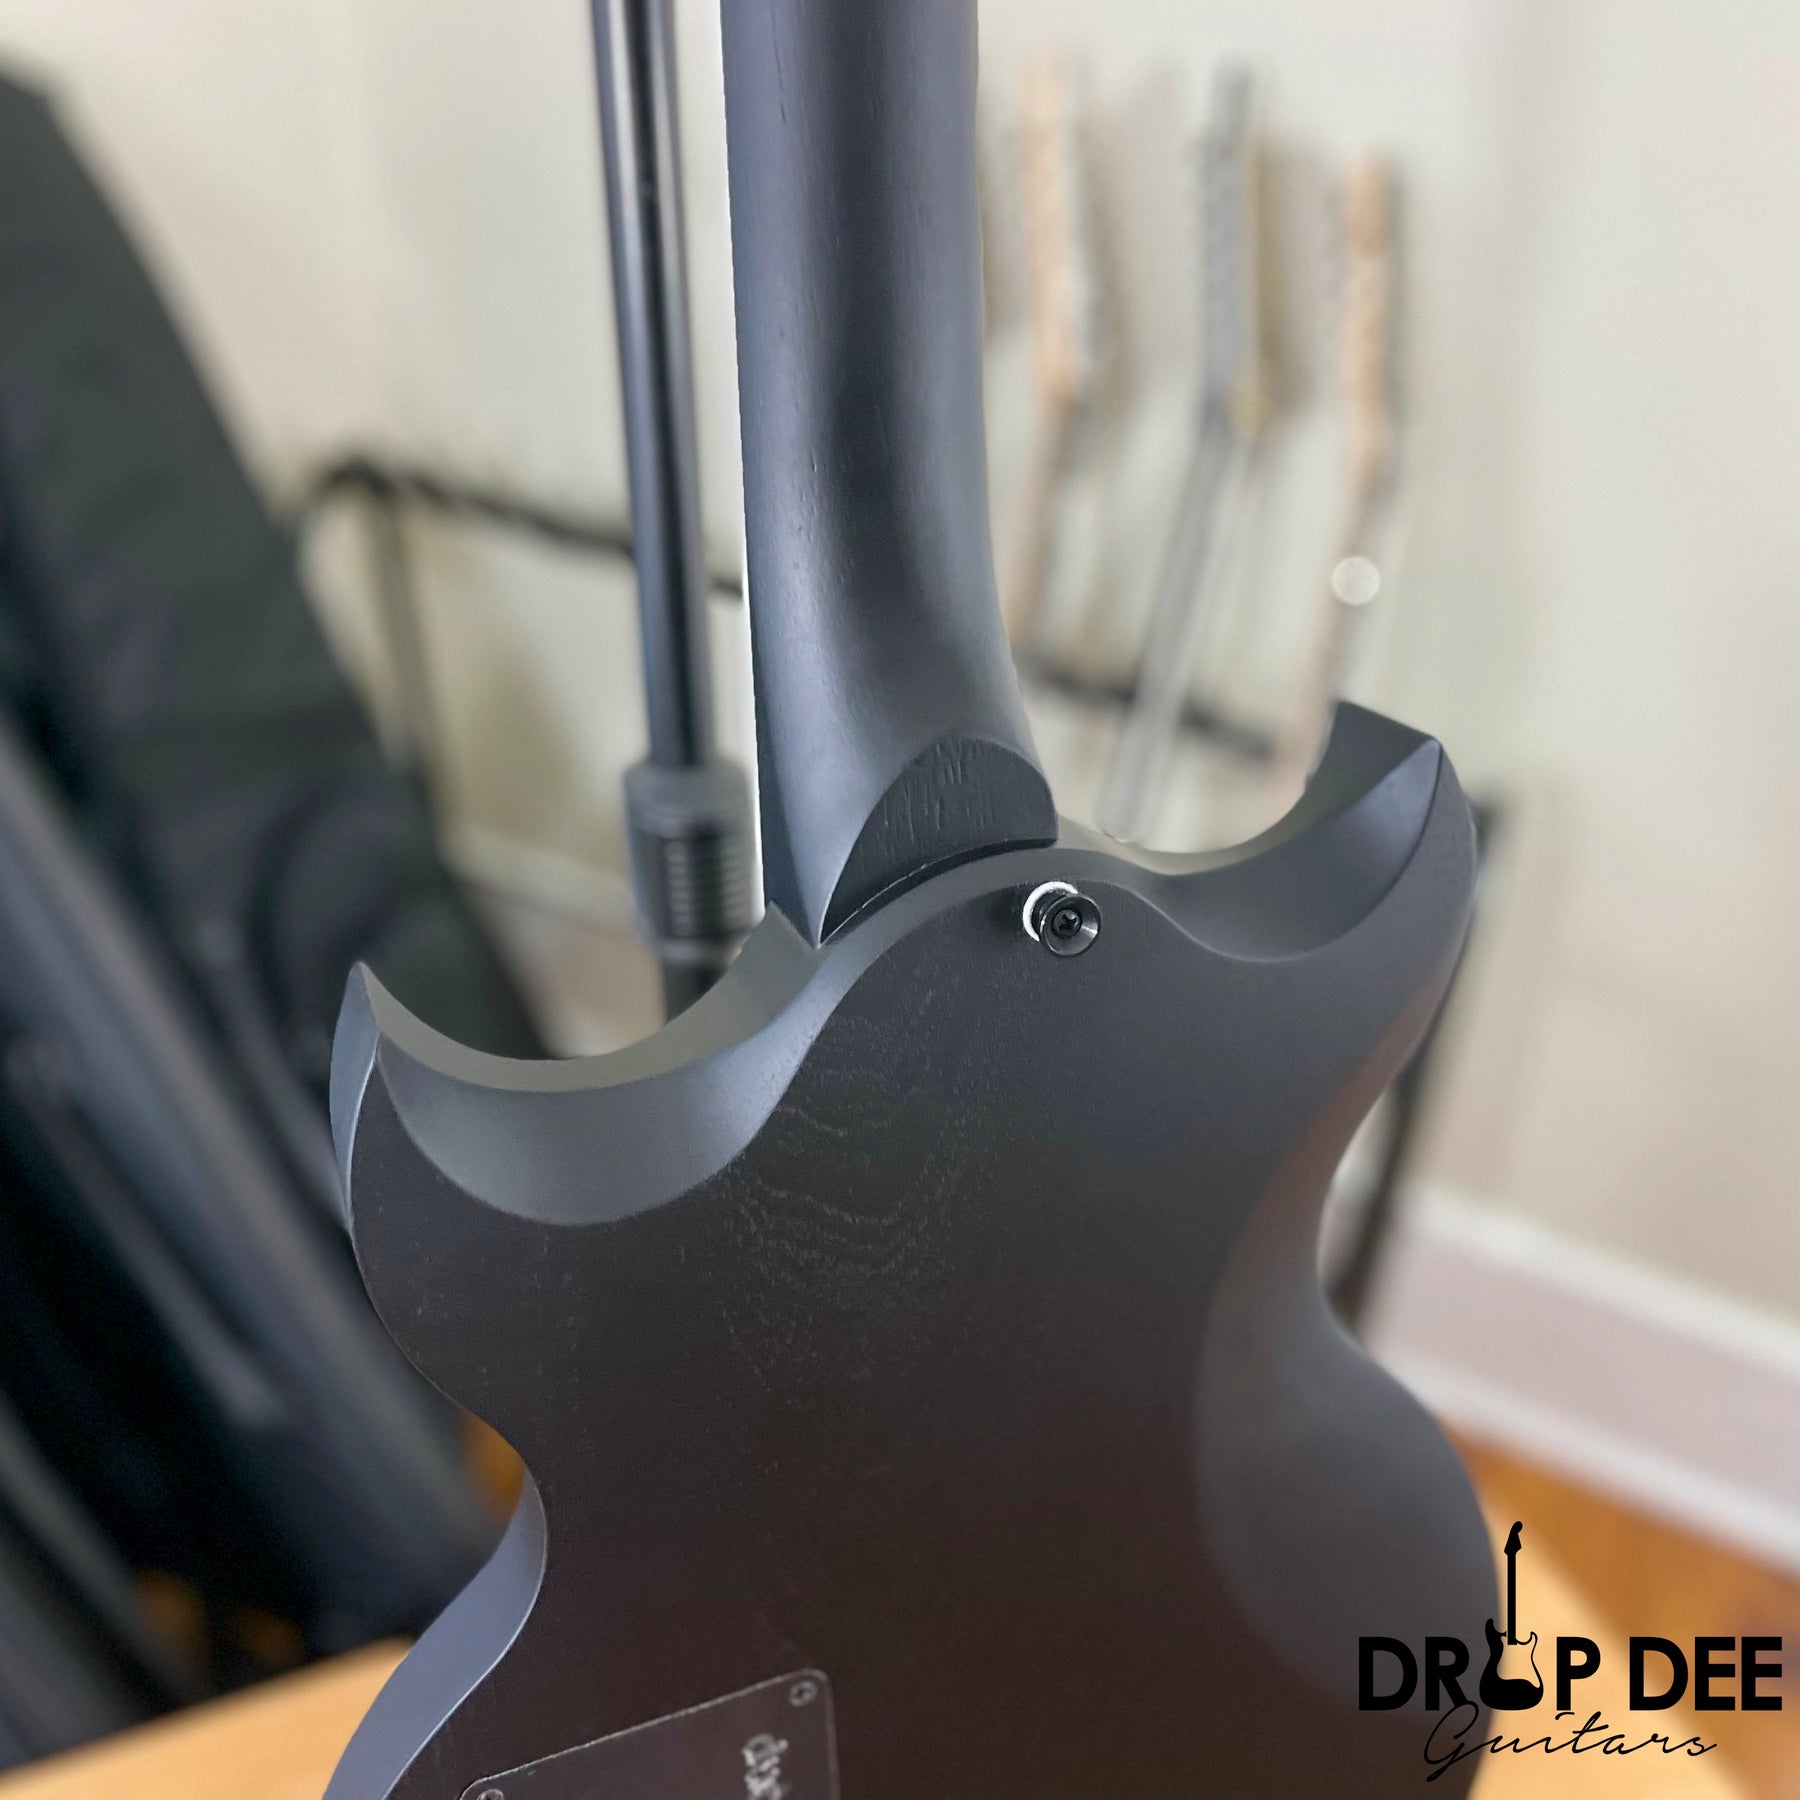 Dunable USA Custom Shop Minotaur Electric Guitar w/ Case